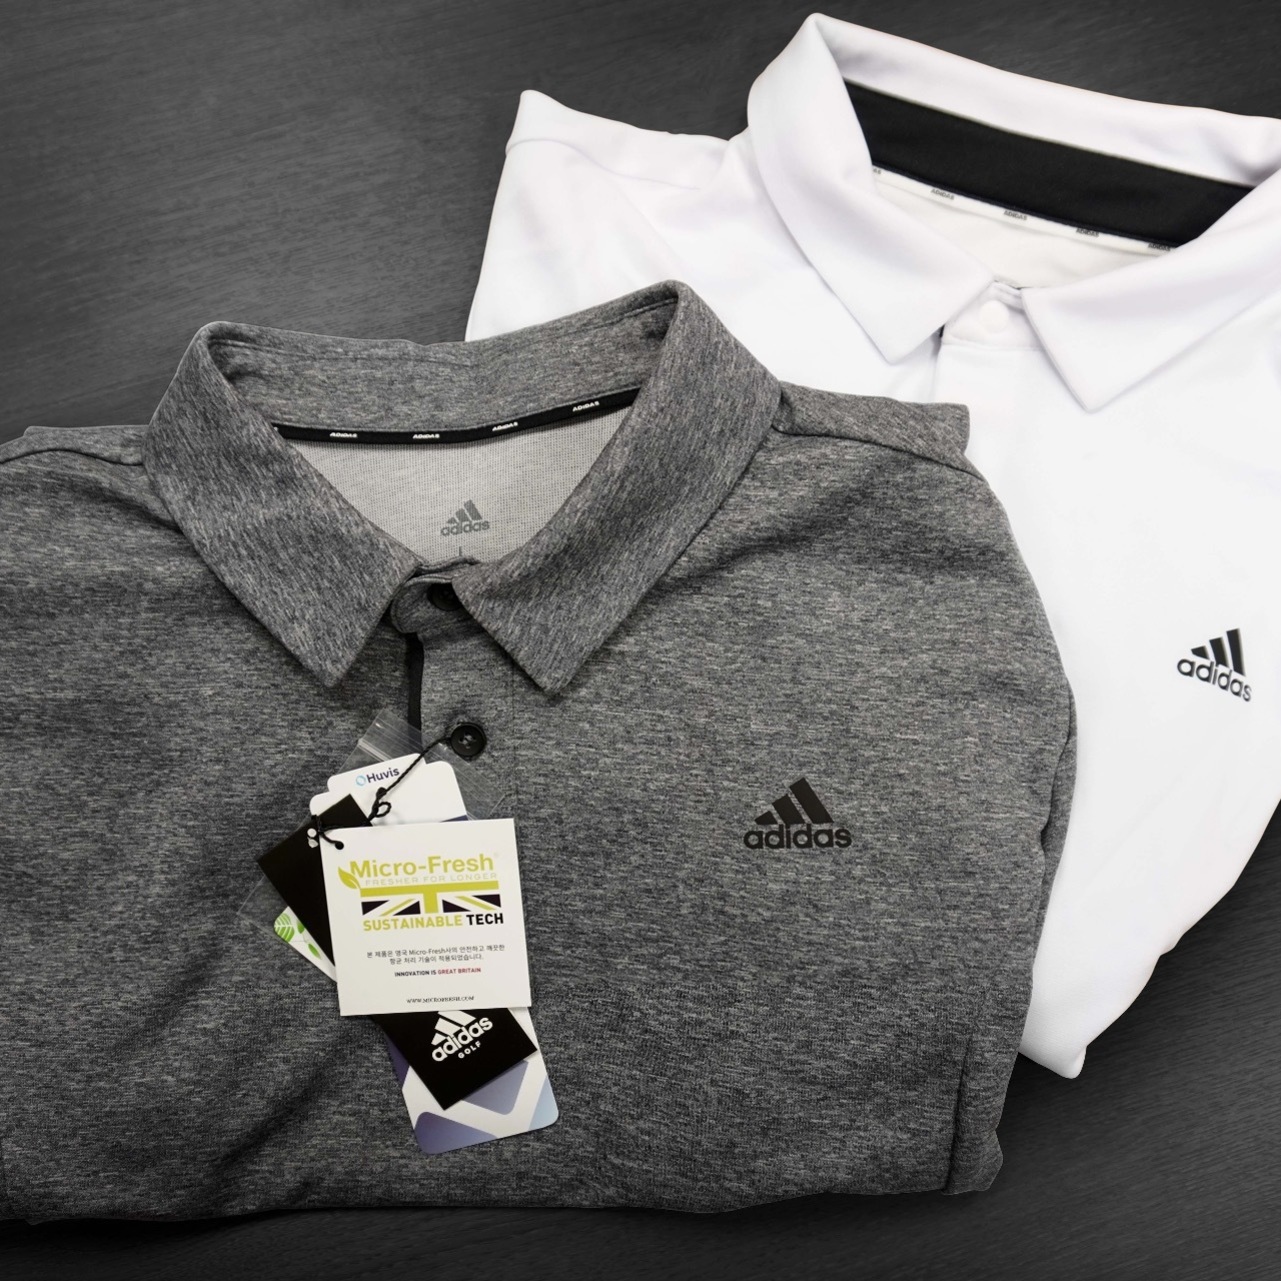 Adidas Golf tops with Micro-Fresh